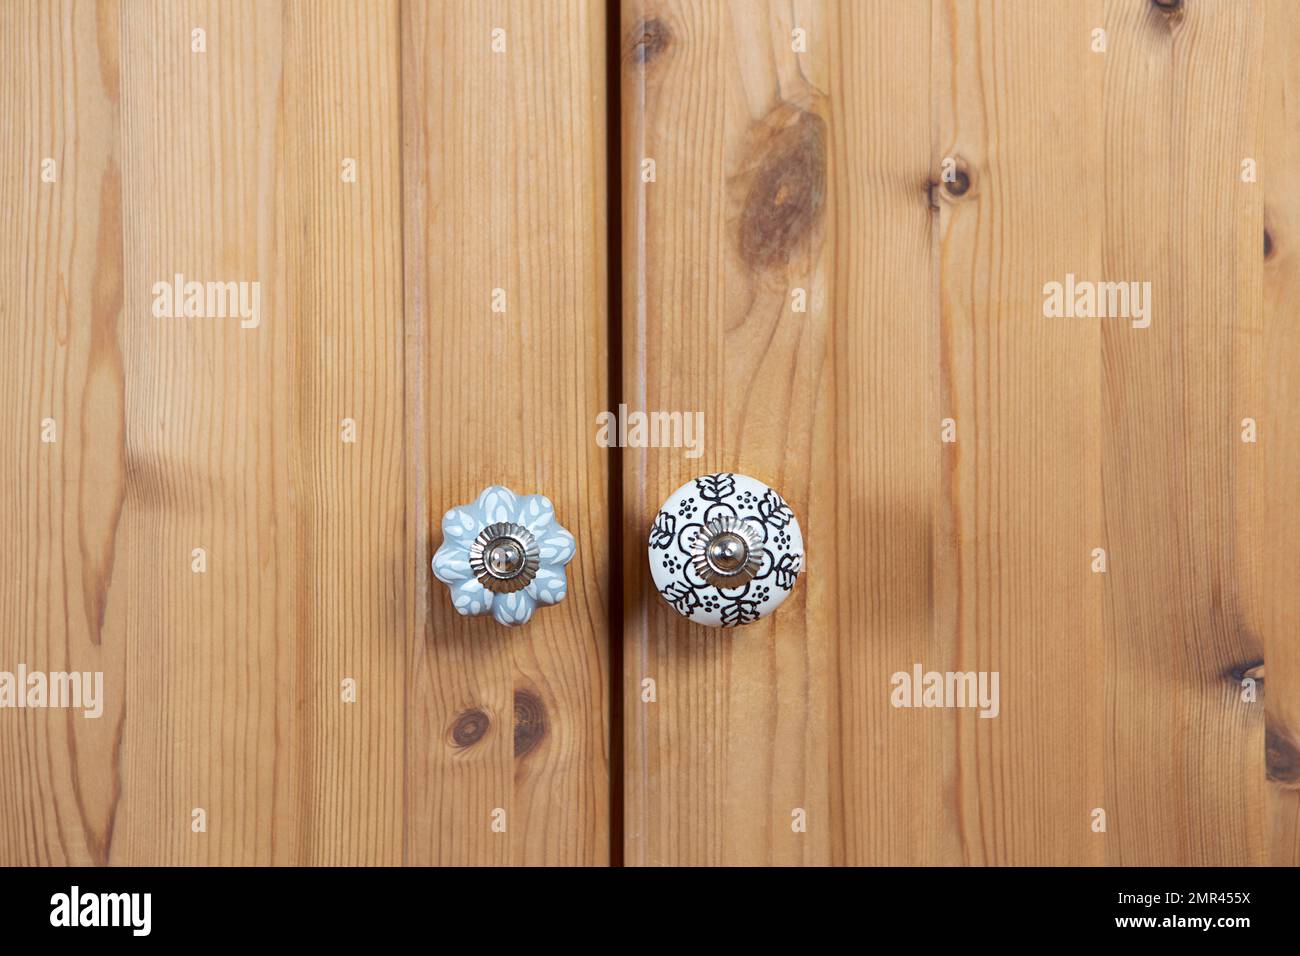 Ceramic knob close-up by closed wooden wardrobe. Creative retro furniture decor background. Stock Photo